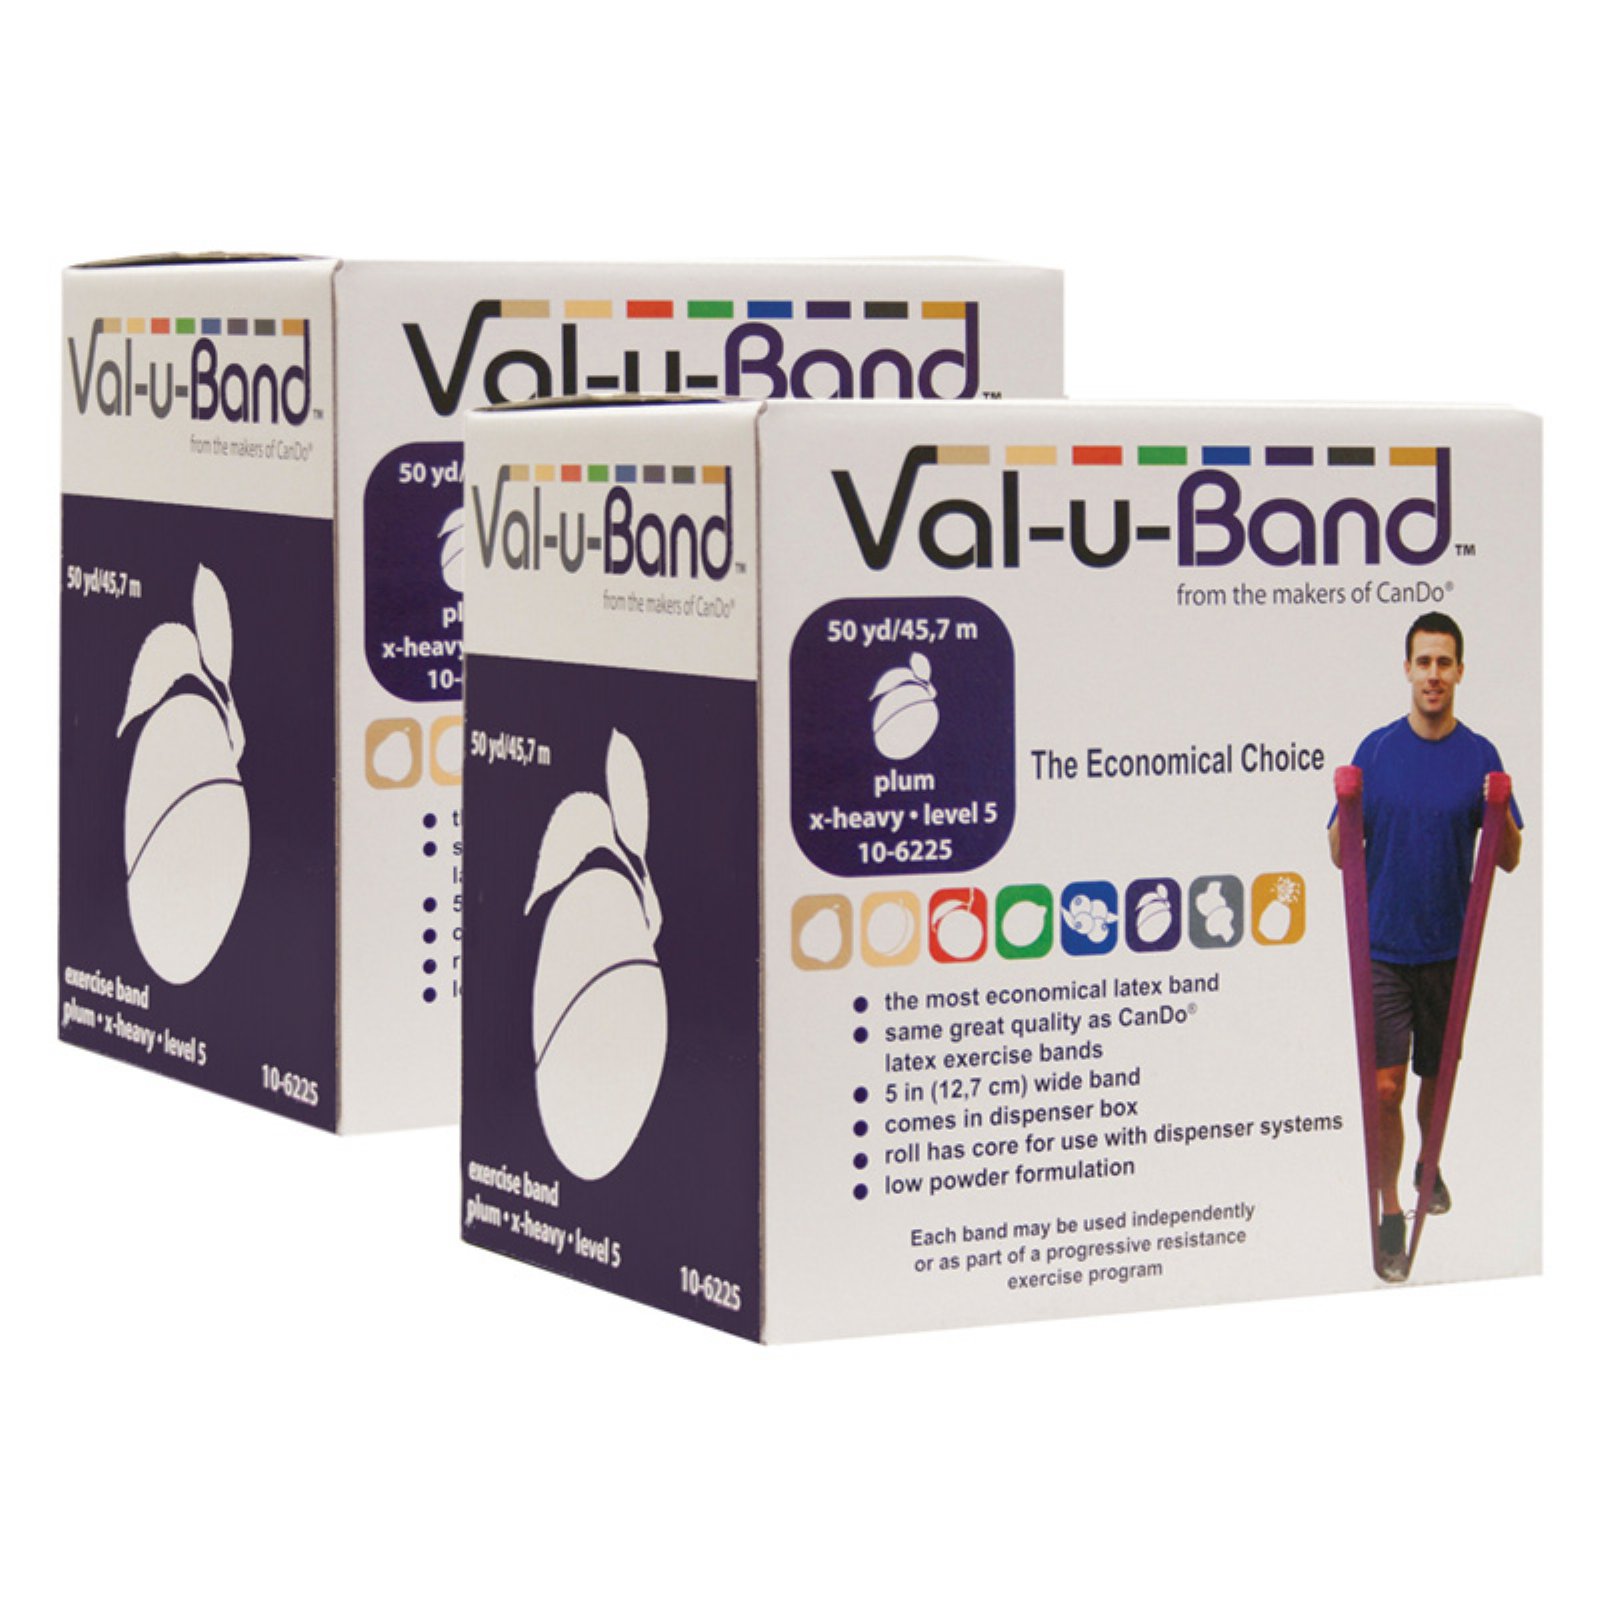 Val-U-Band Low Powder Exercise Fitness Band - 50 yard - image 1 of 3